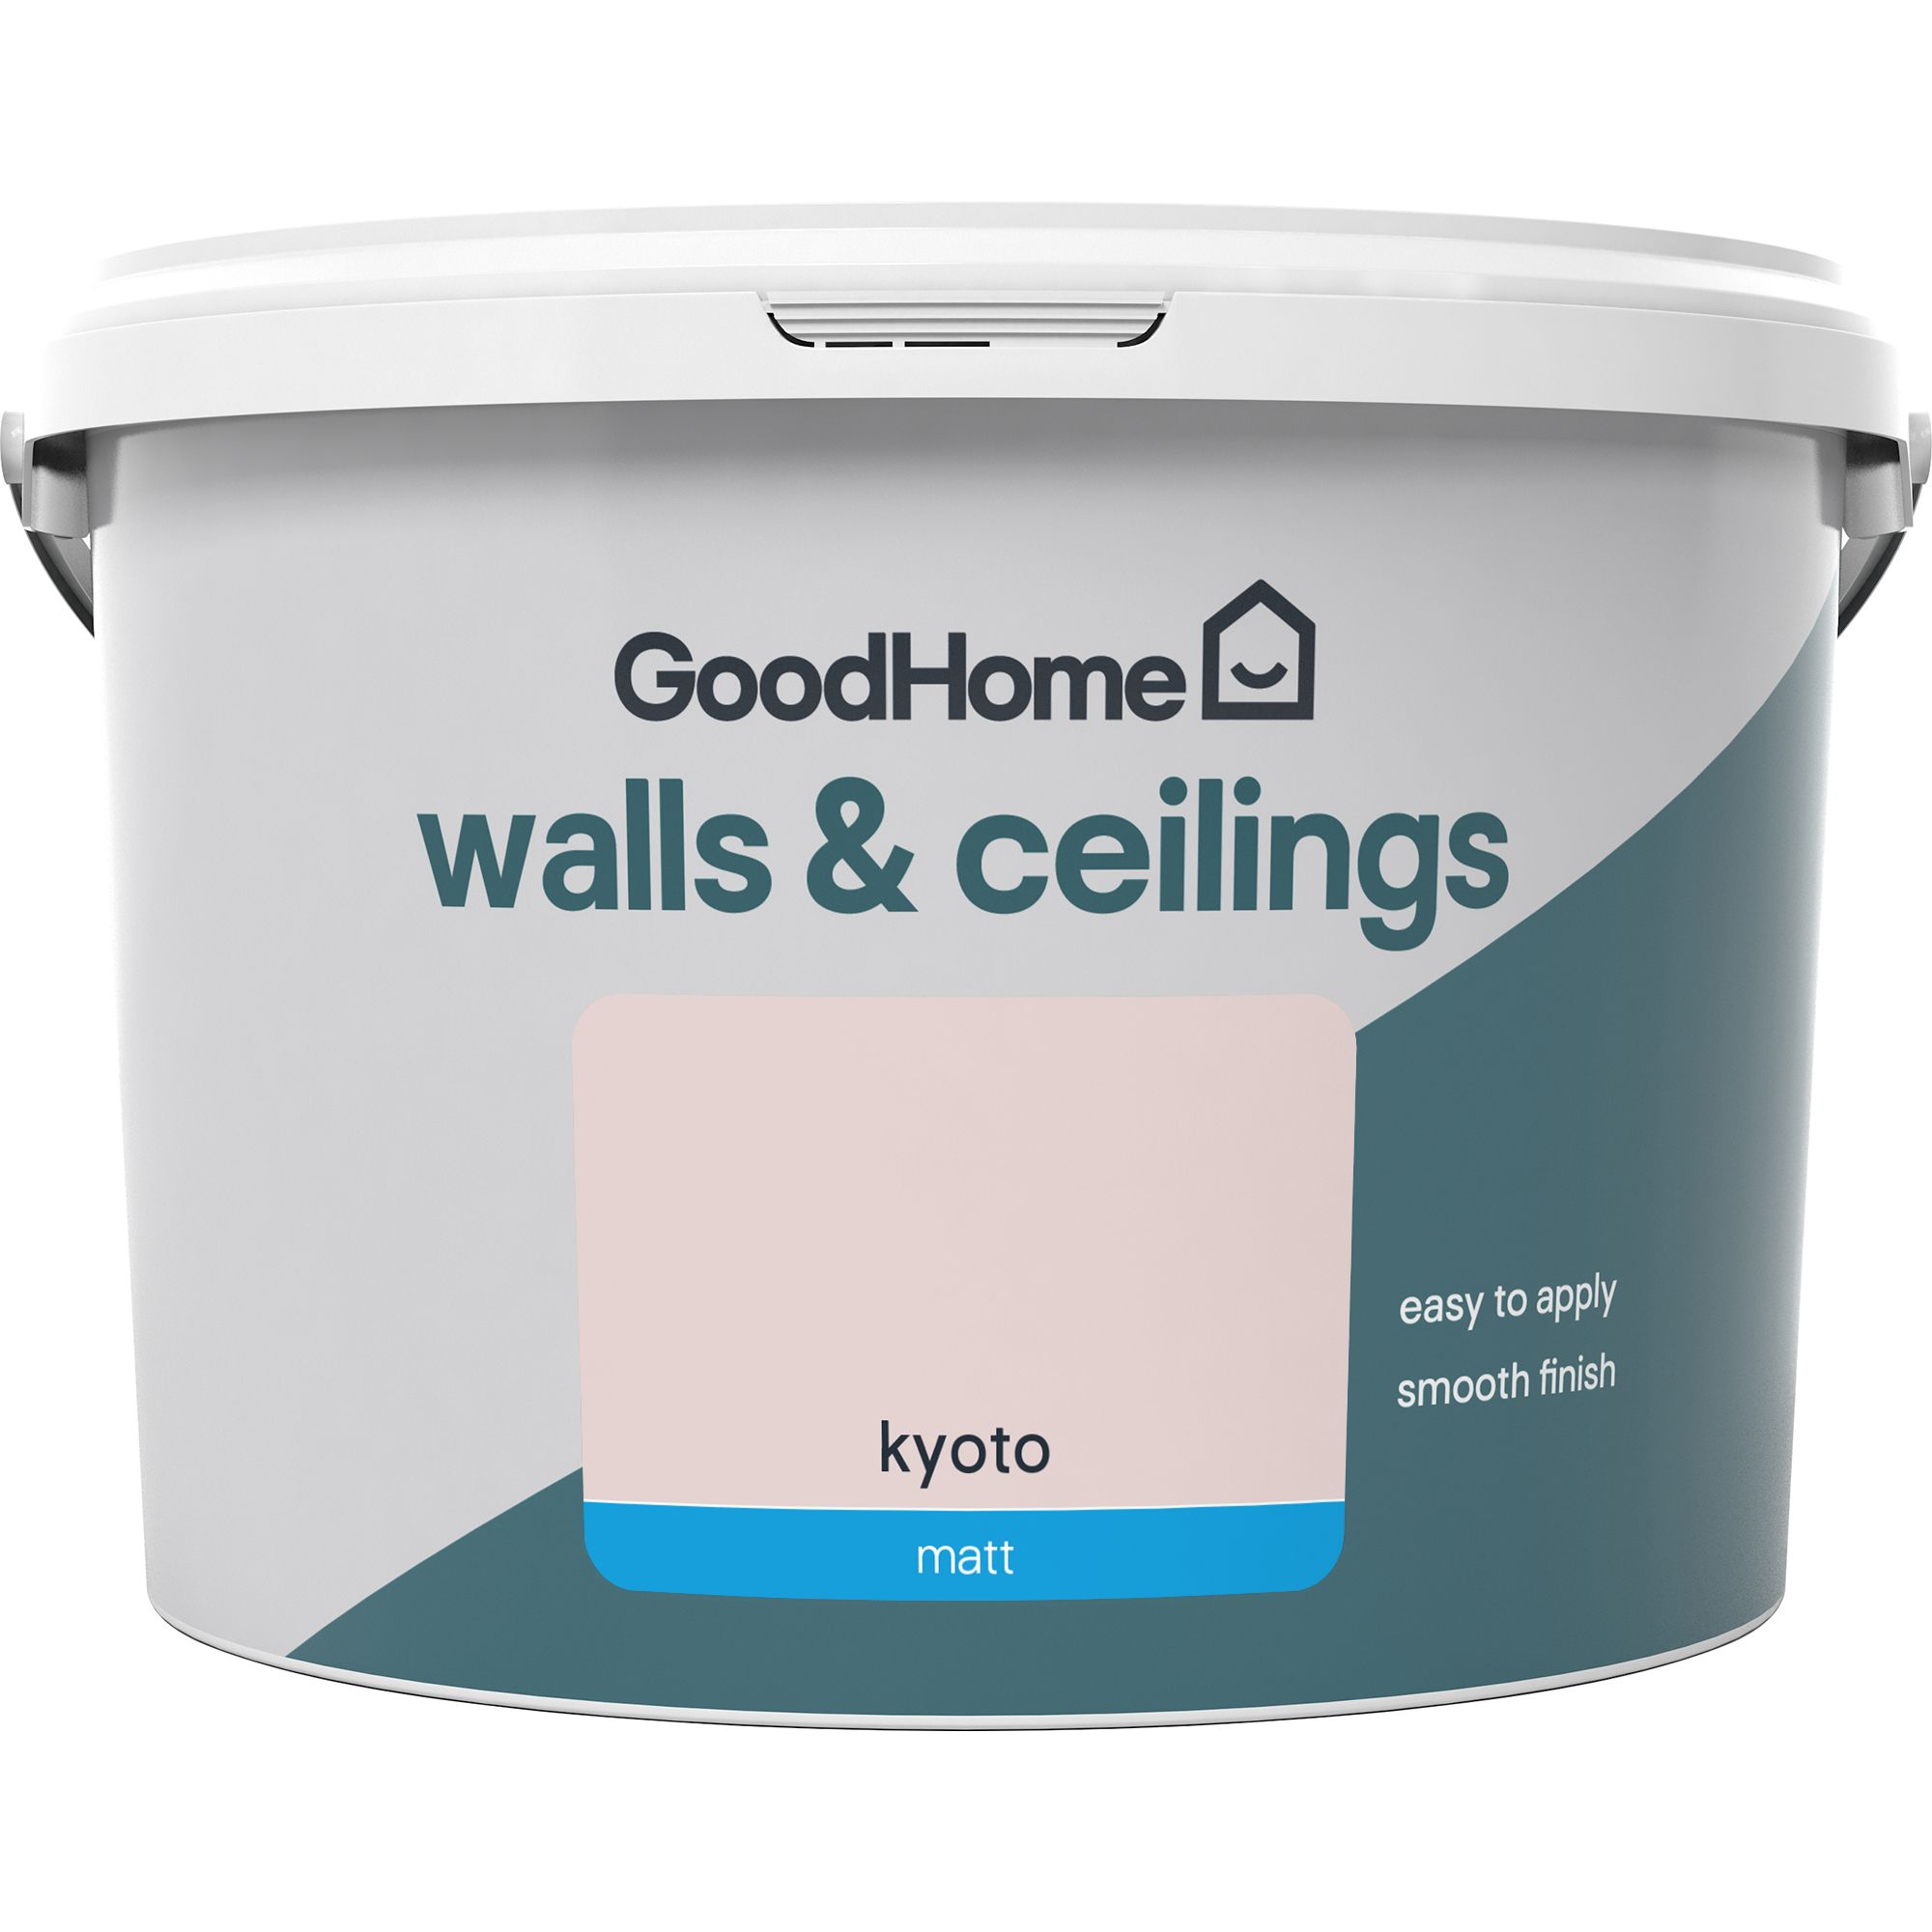 GoodHome Walls & ceilings Kyoto Matt Emulsion paint, 2.5L